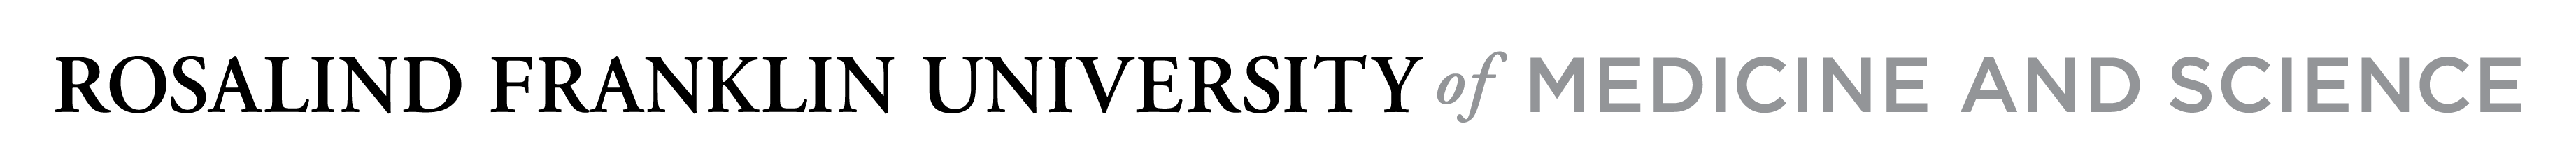 Rosalind Franklin wordmark logo